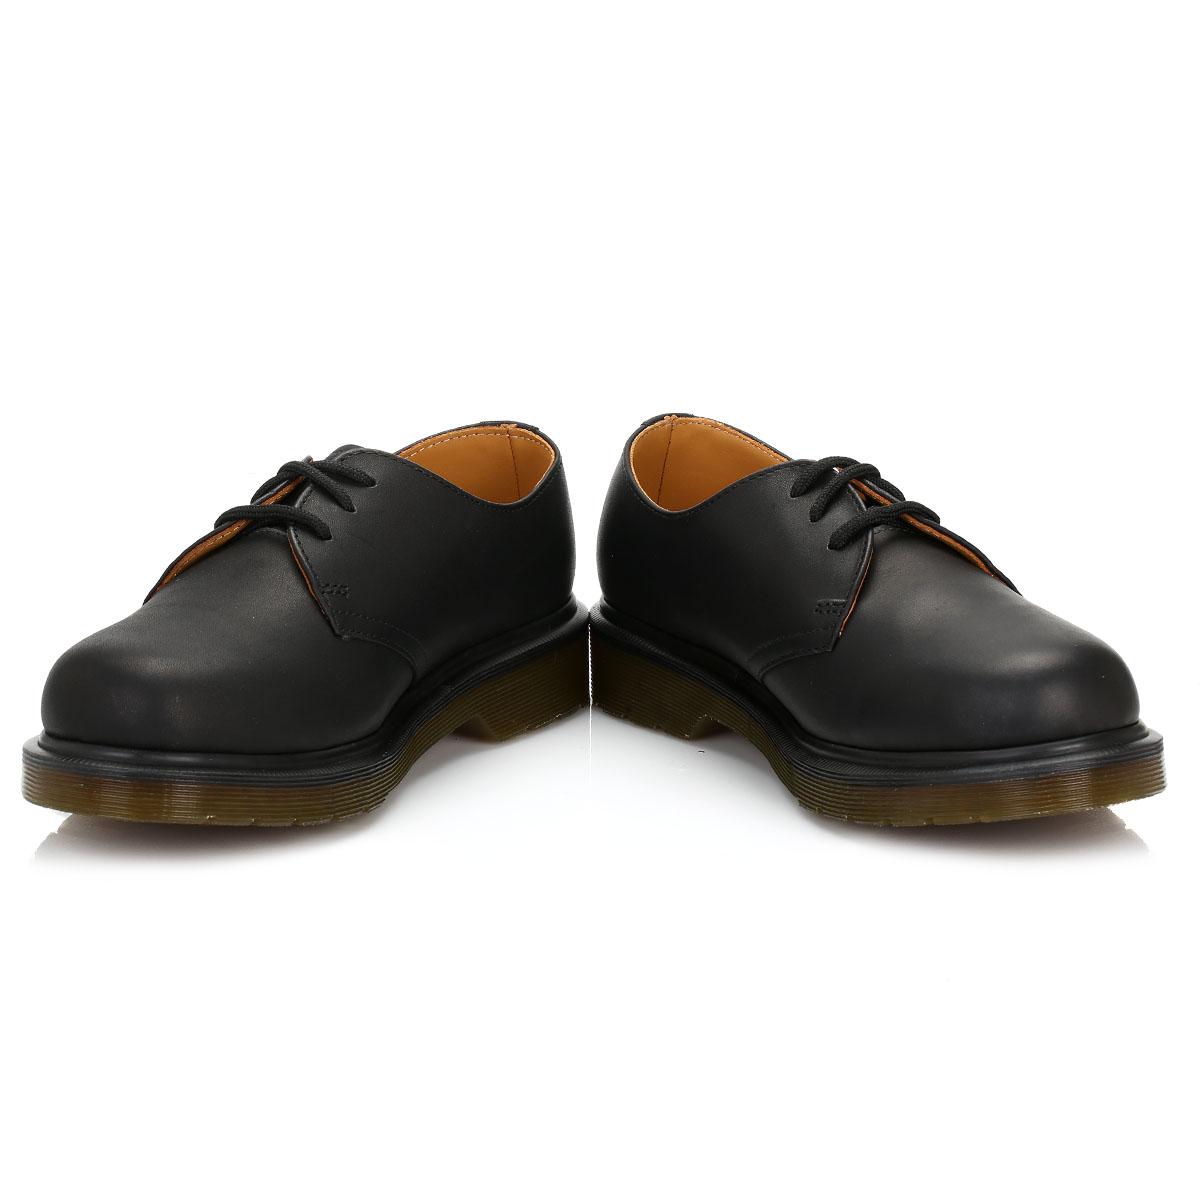 Dr. Martens Leather Dr. Martens 1461 Greasy Black Shoes for Men - Lyst